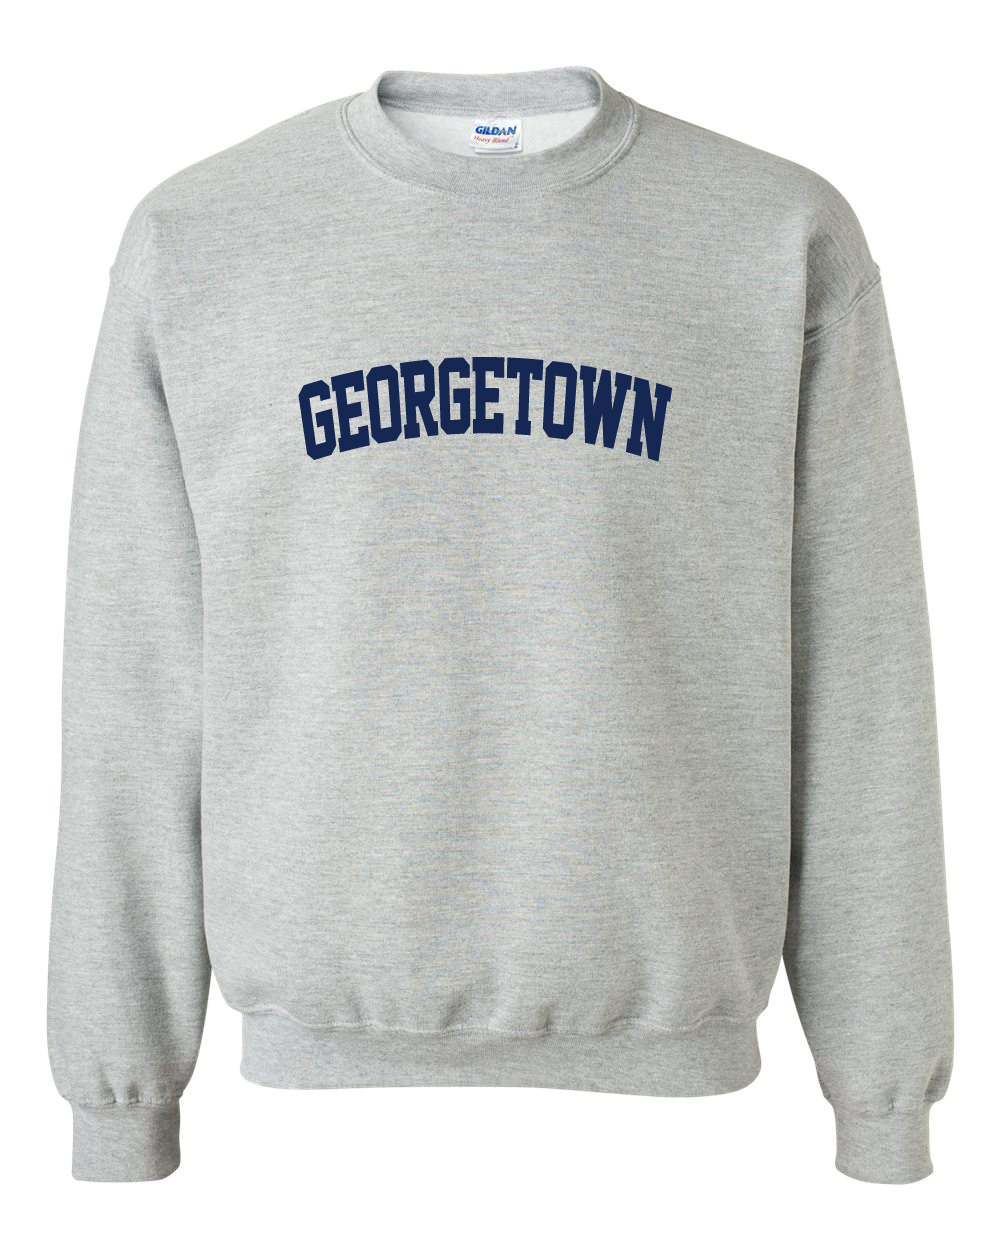 Georgetown Sweatshirt | anncloset.com